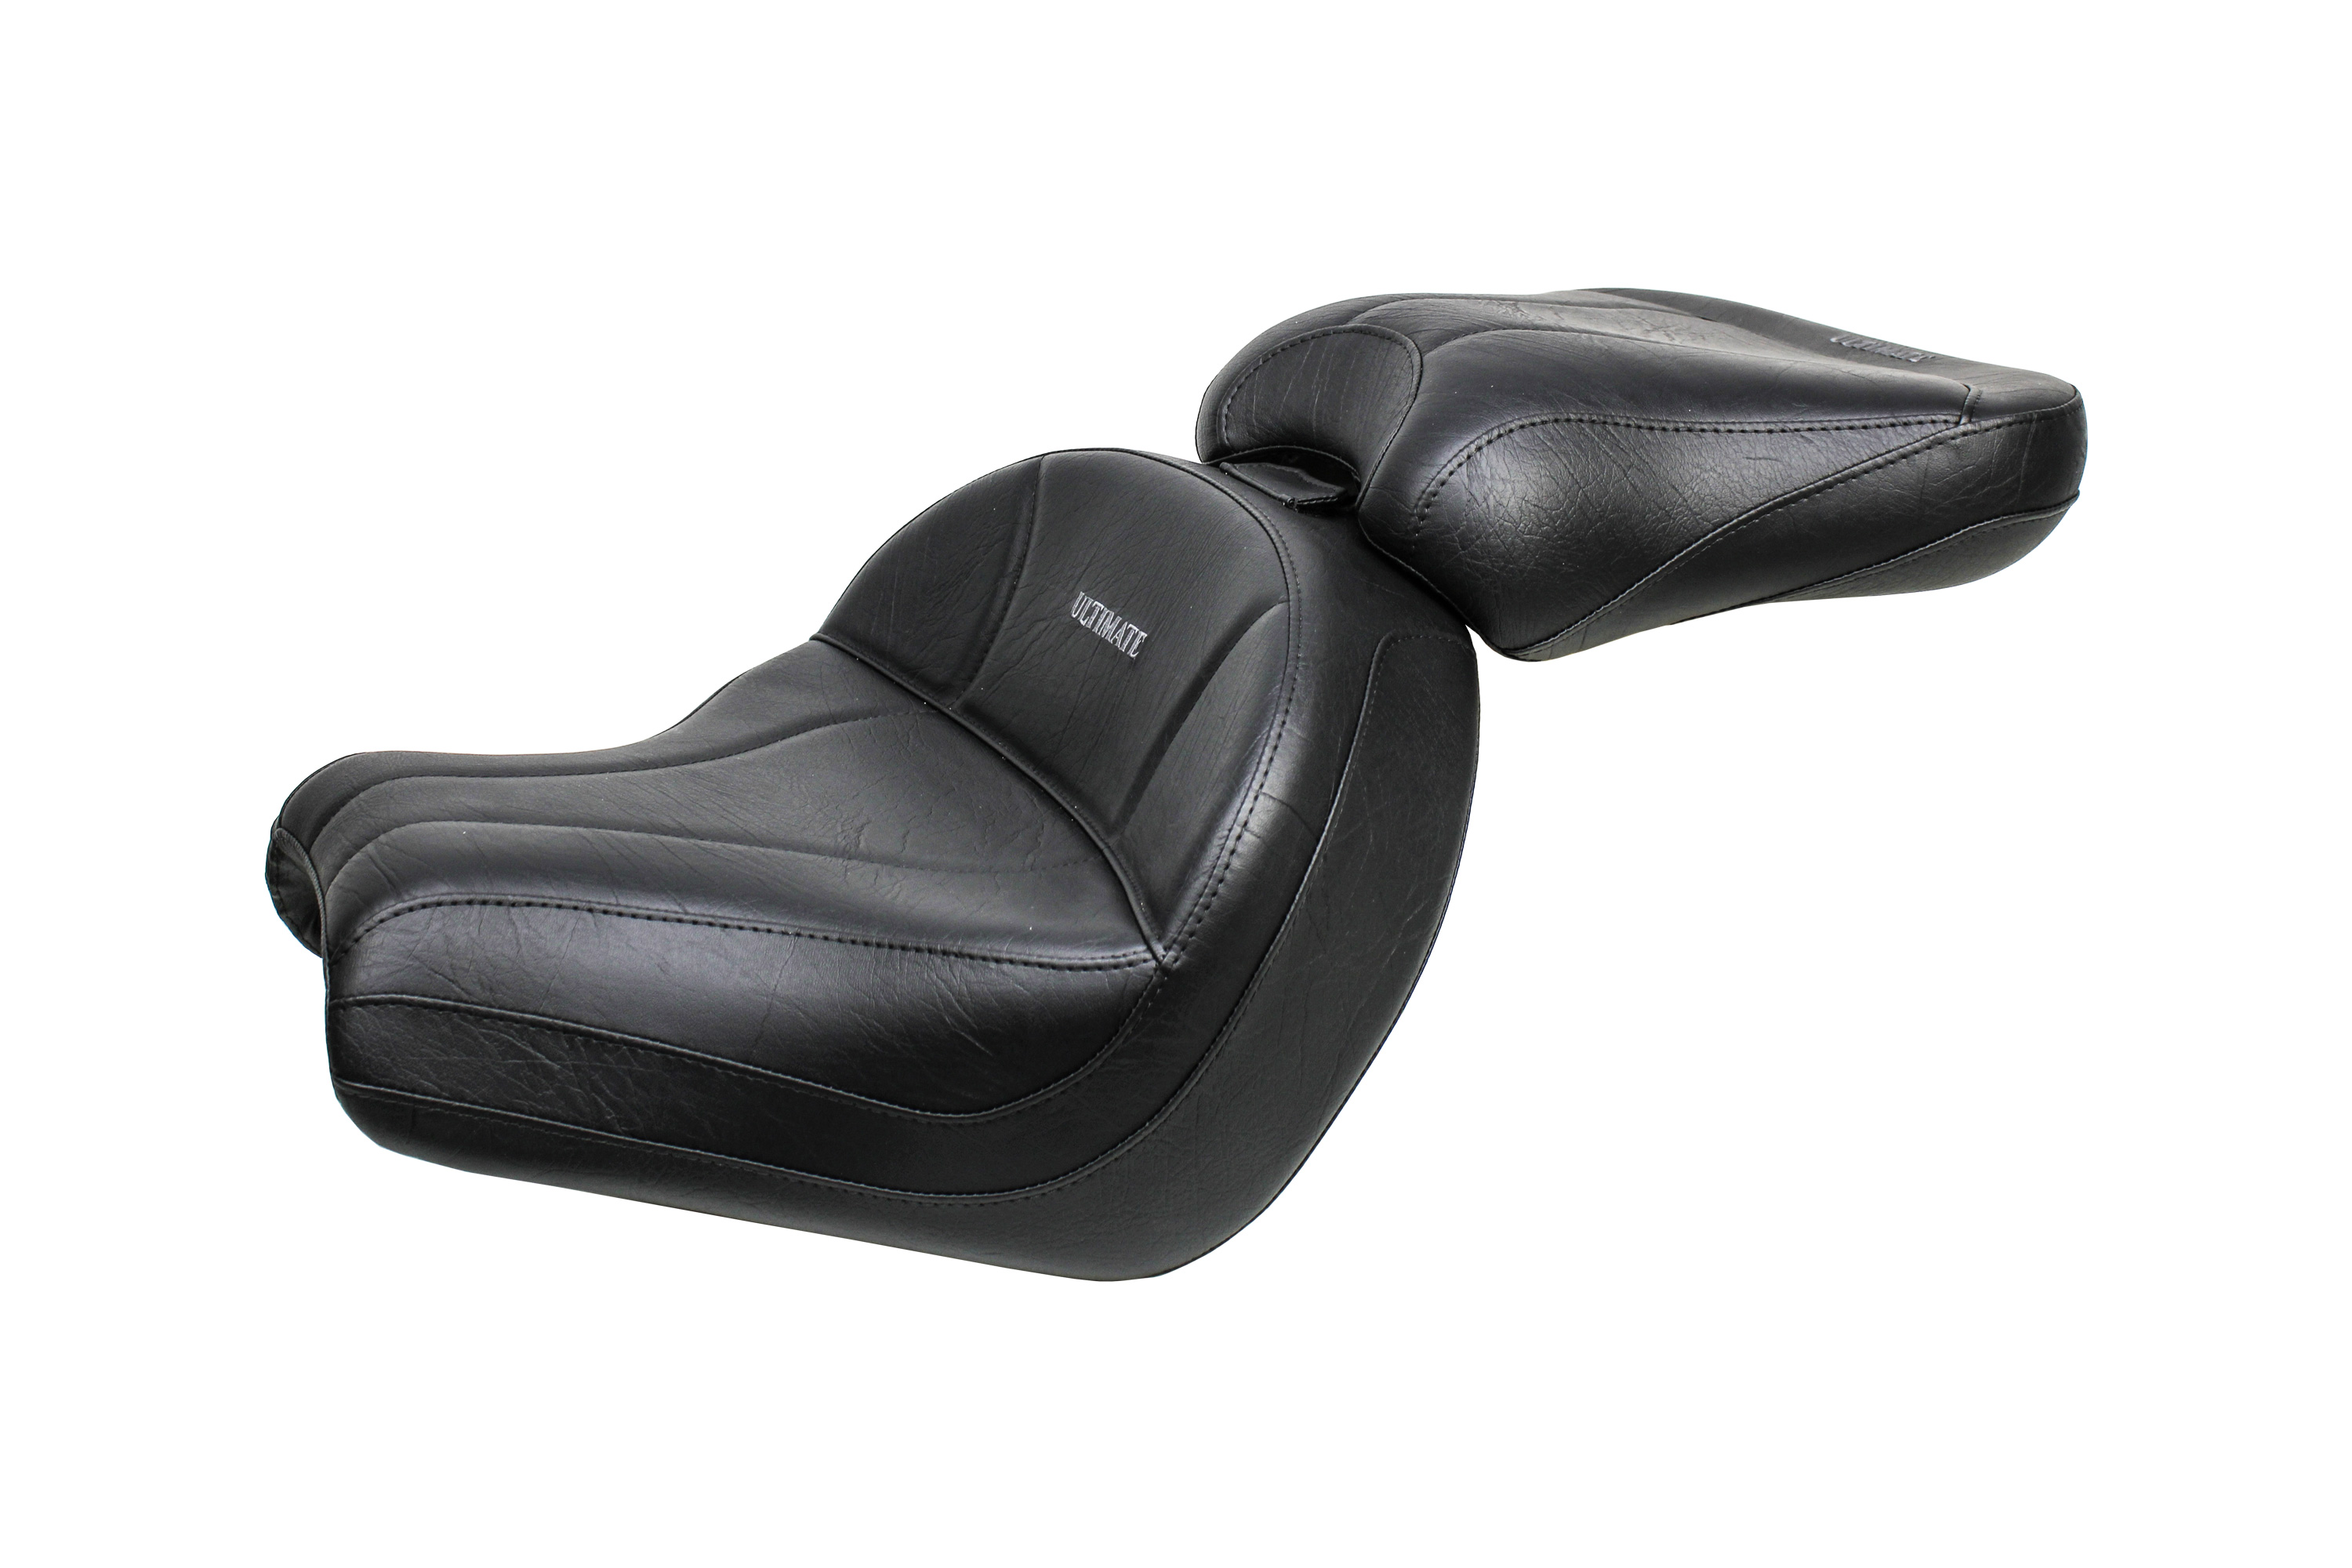 VTX 1300 C Midrider Seat and Passenger Seat - Plain or Studded